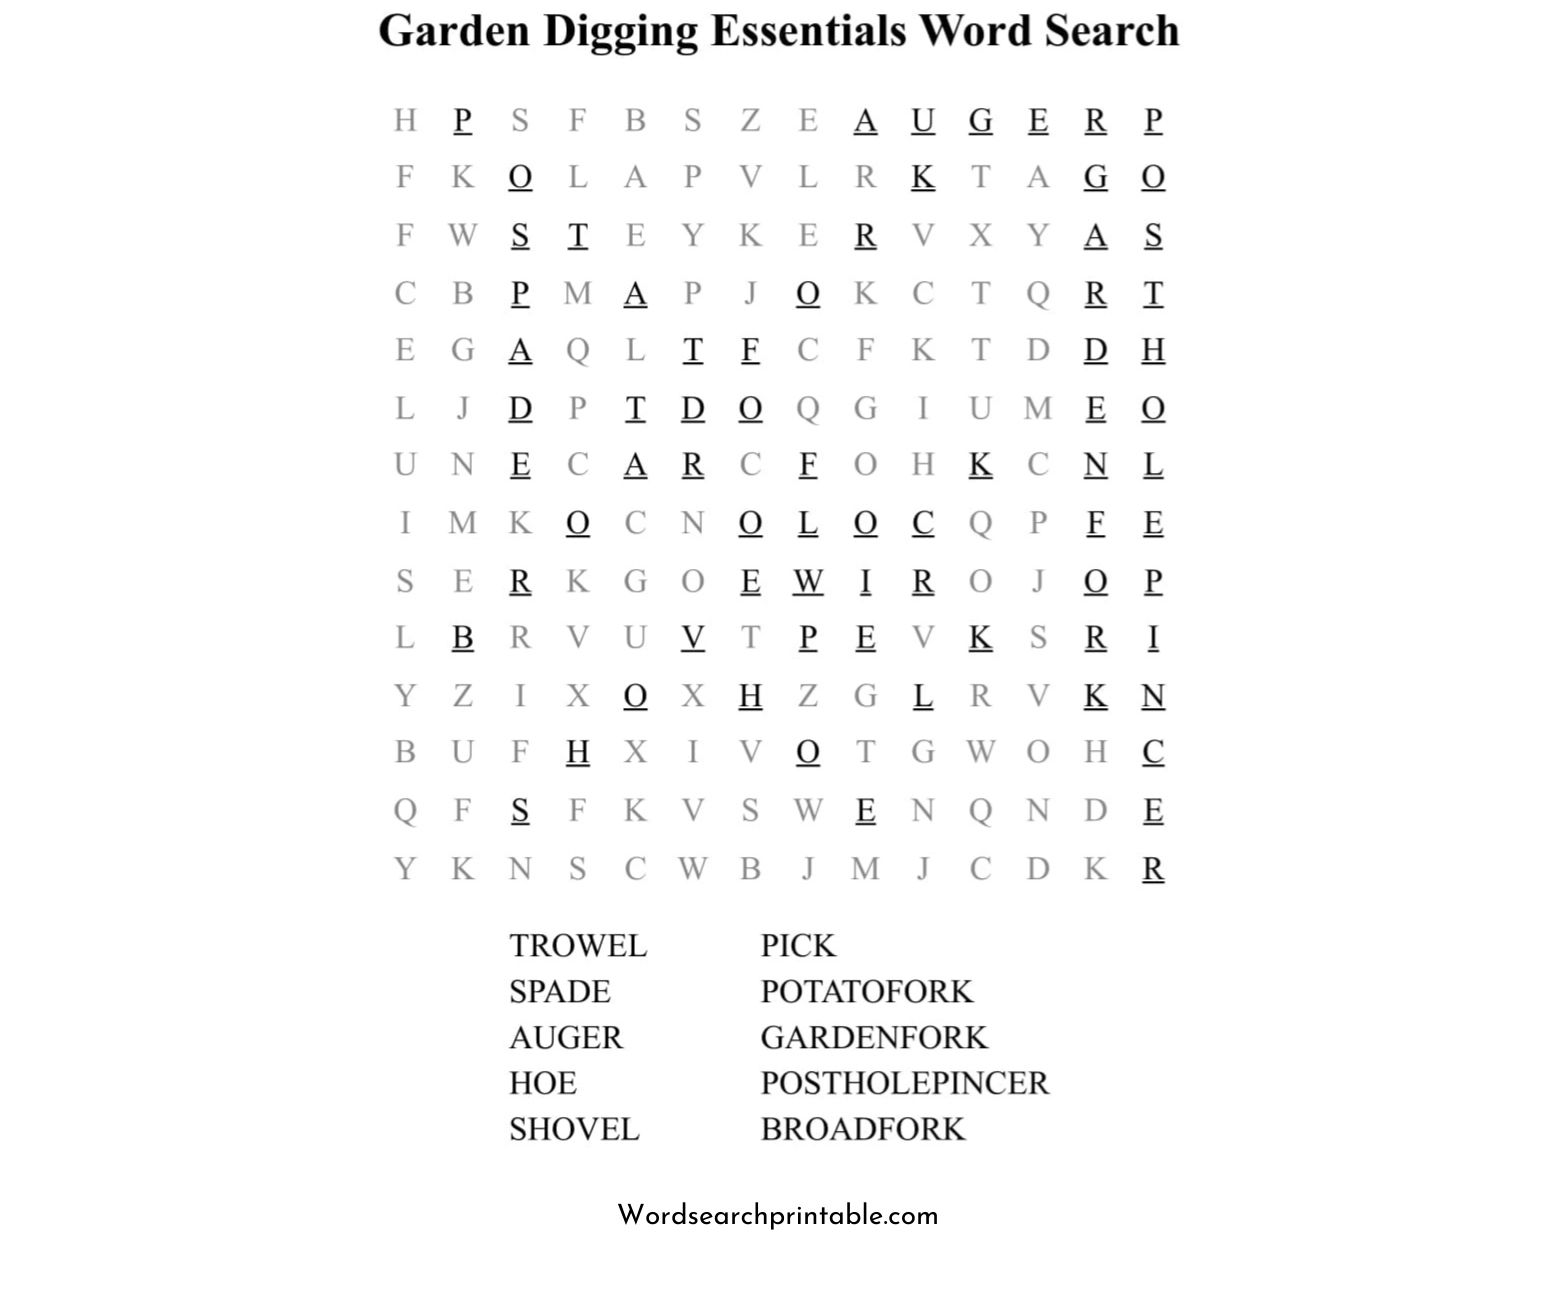 garden digging essentials word search puzzle solution